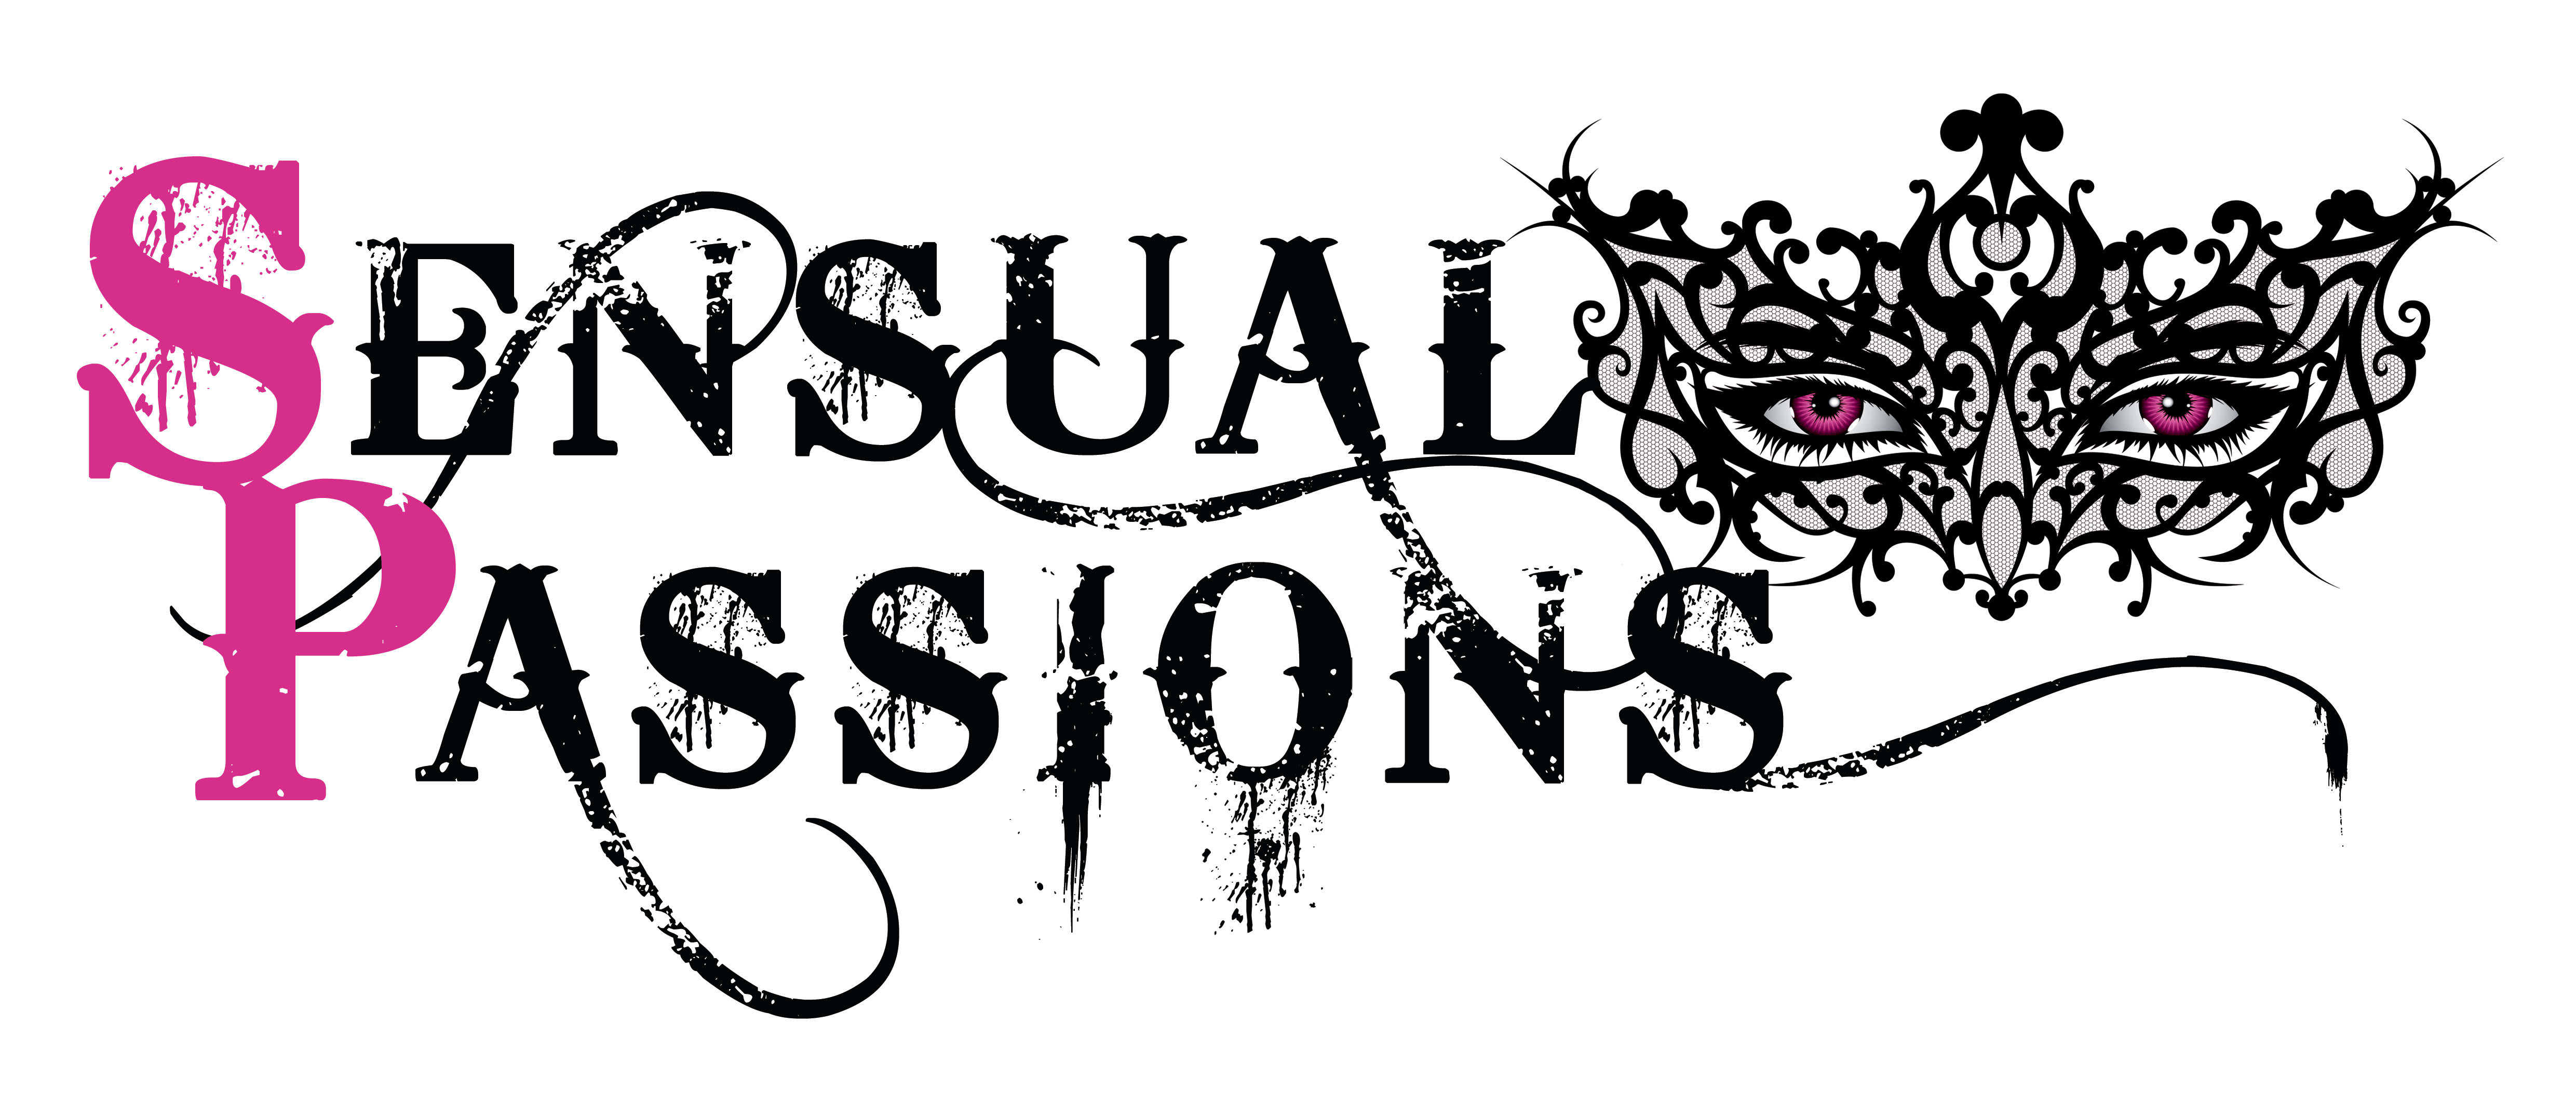 Sensual Passions